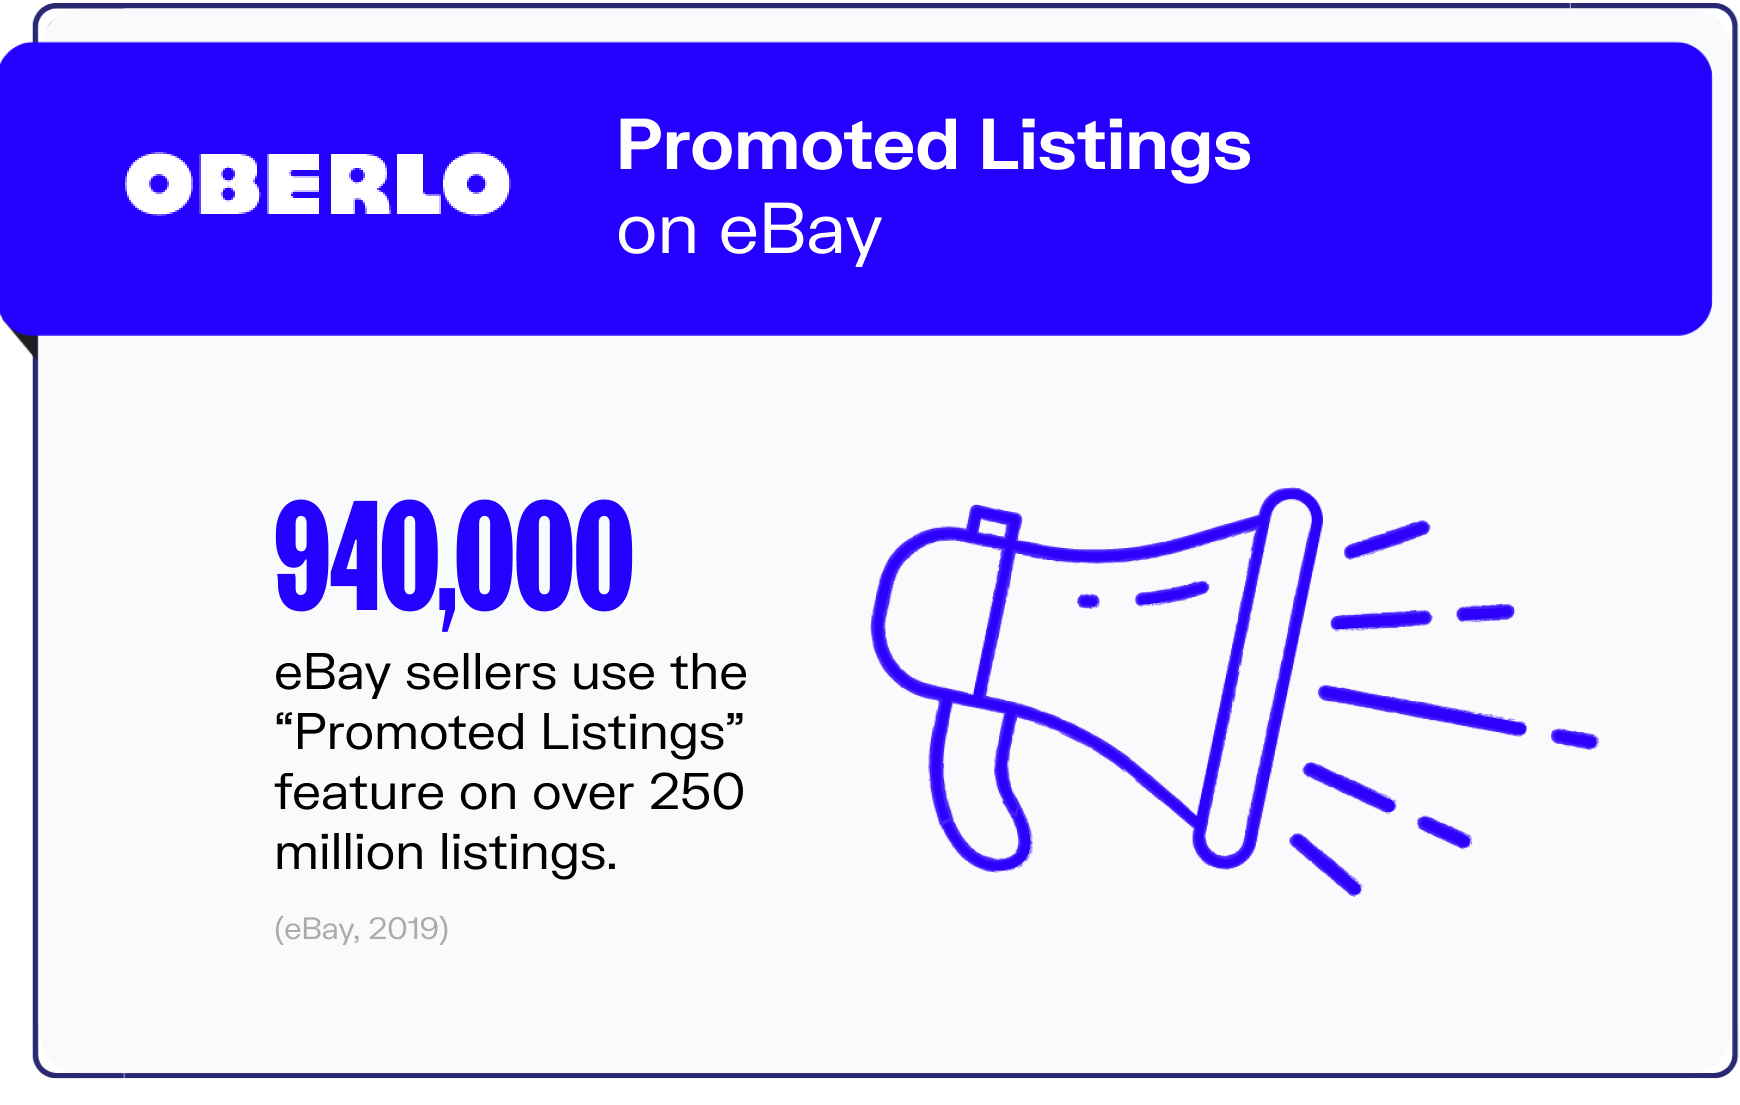 ebay statistics graphic7